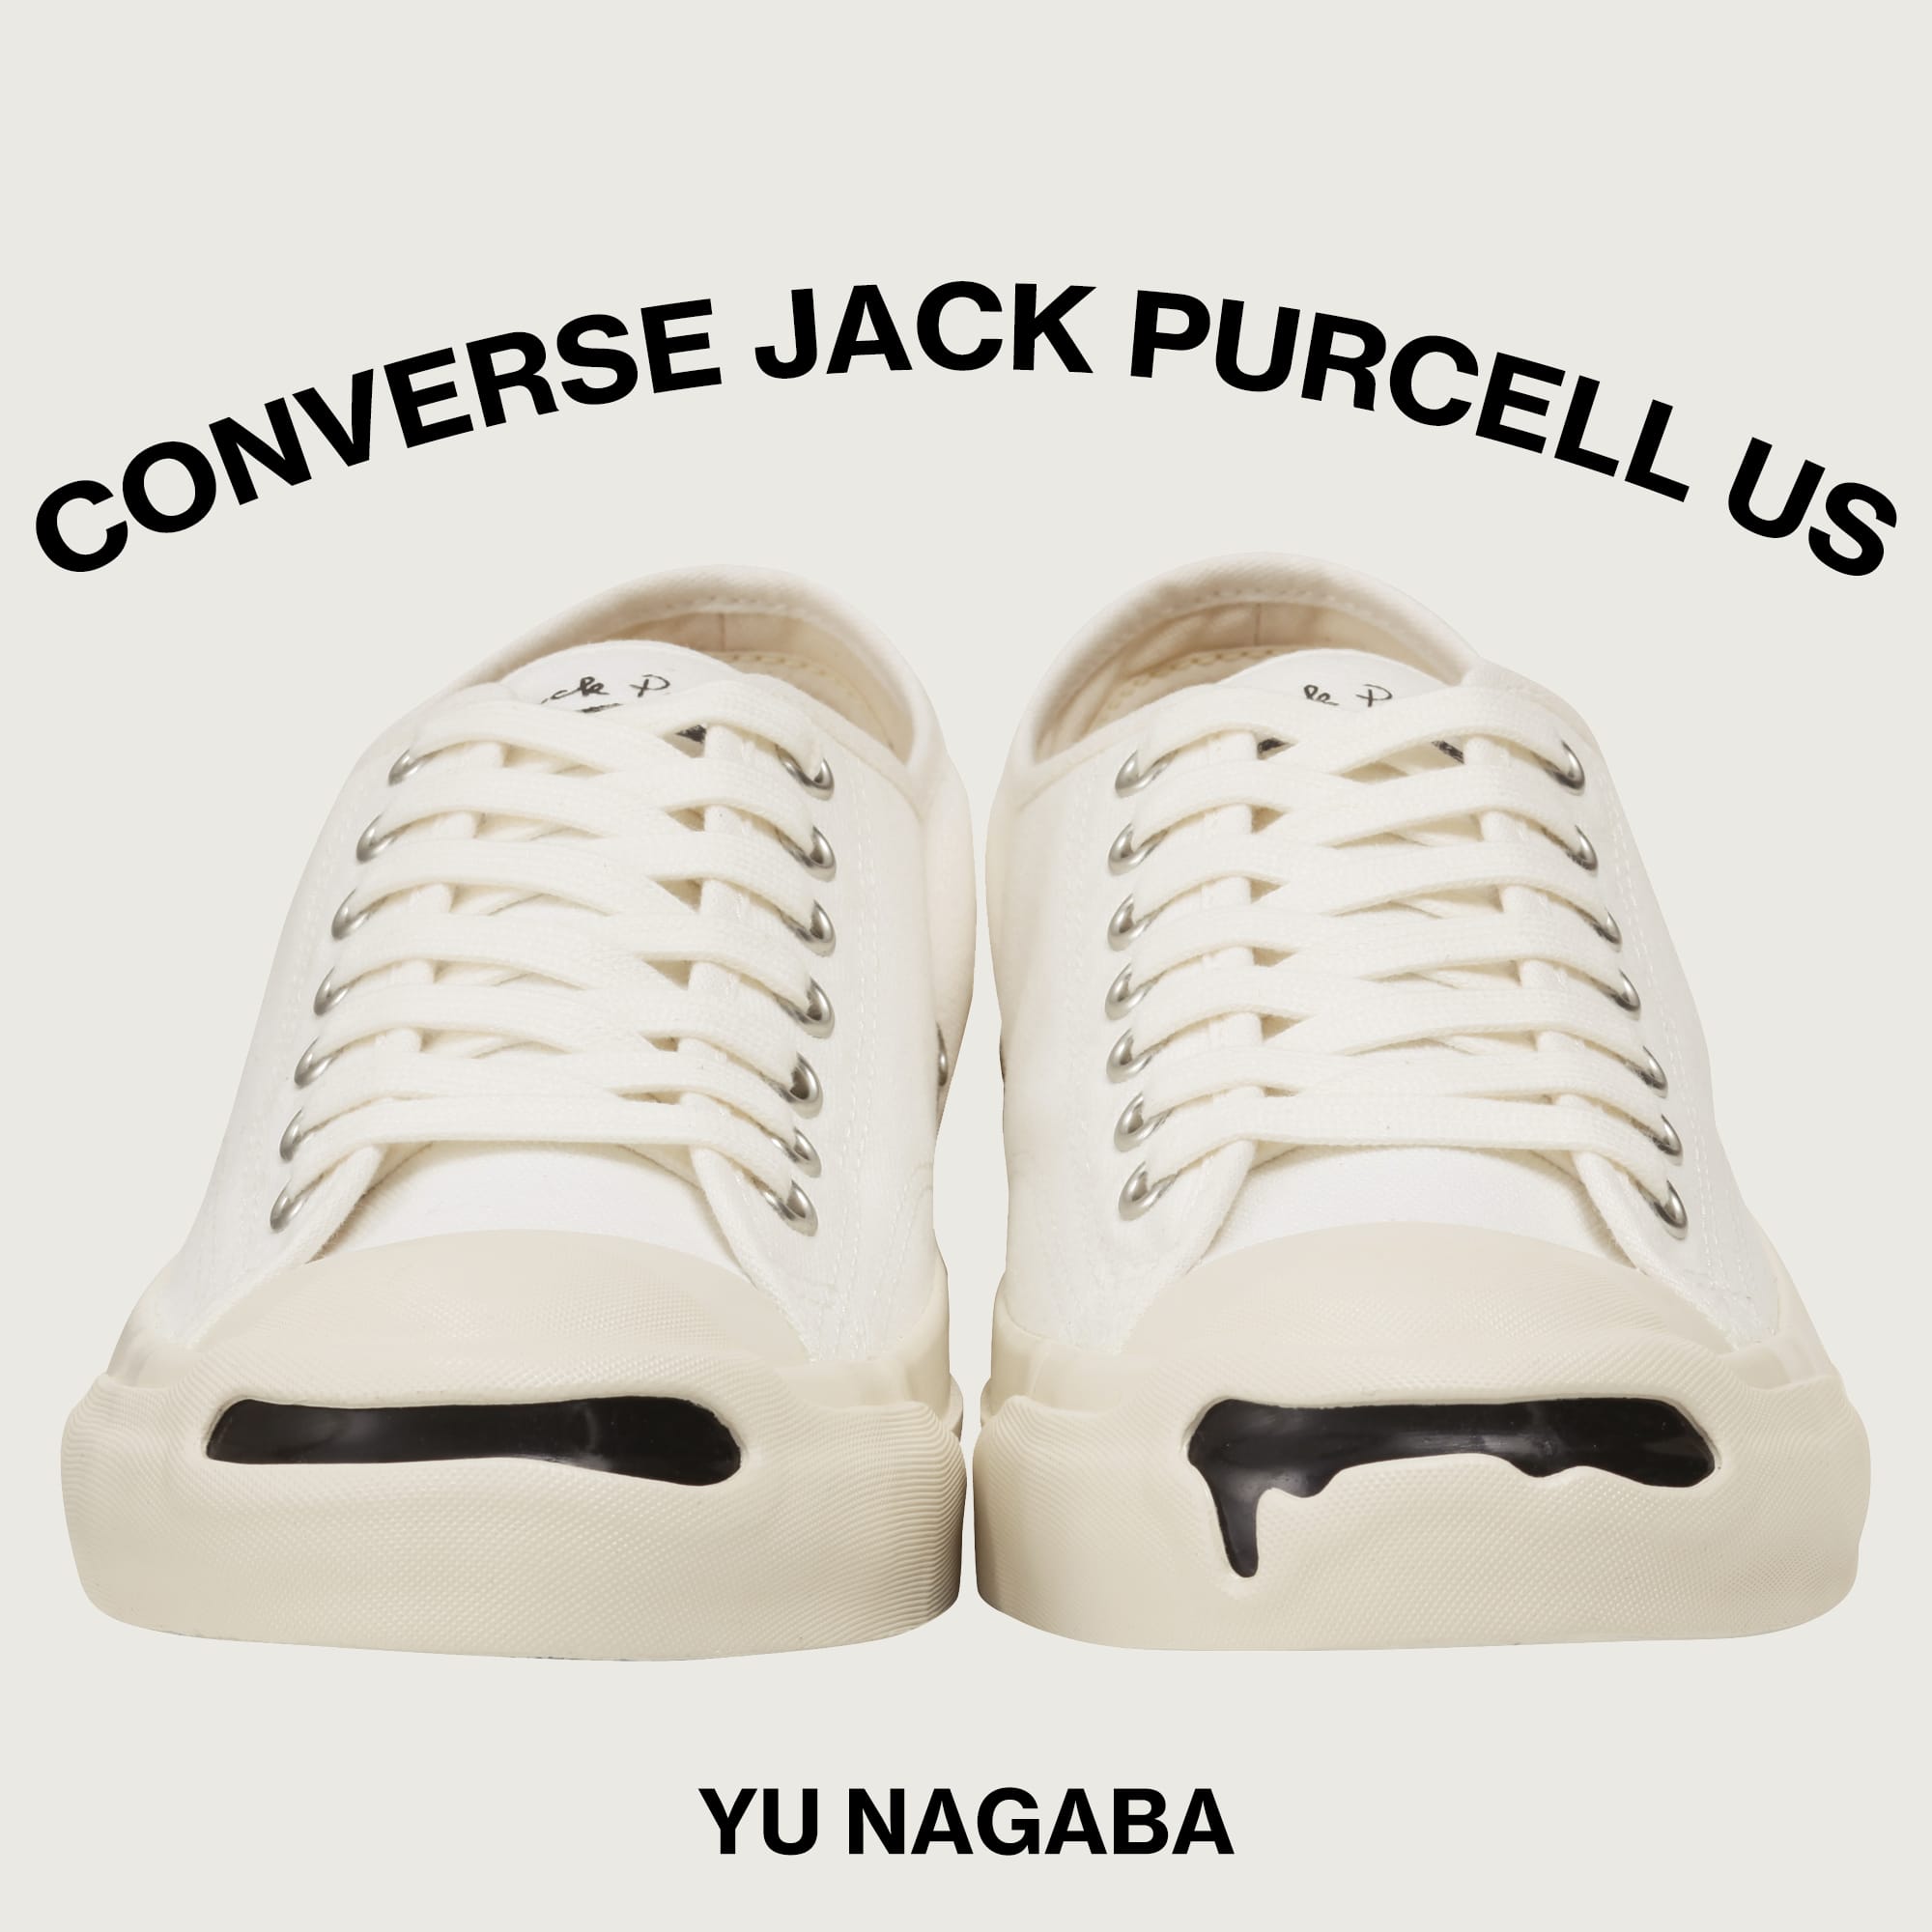 CONVERSE JACK PURCELL US YU NAGABA